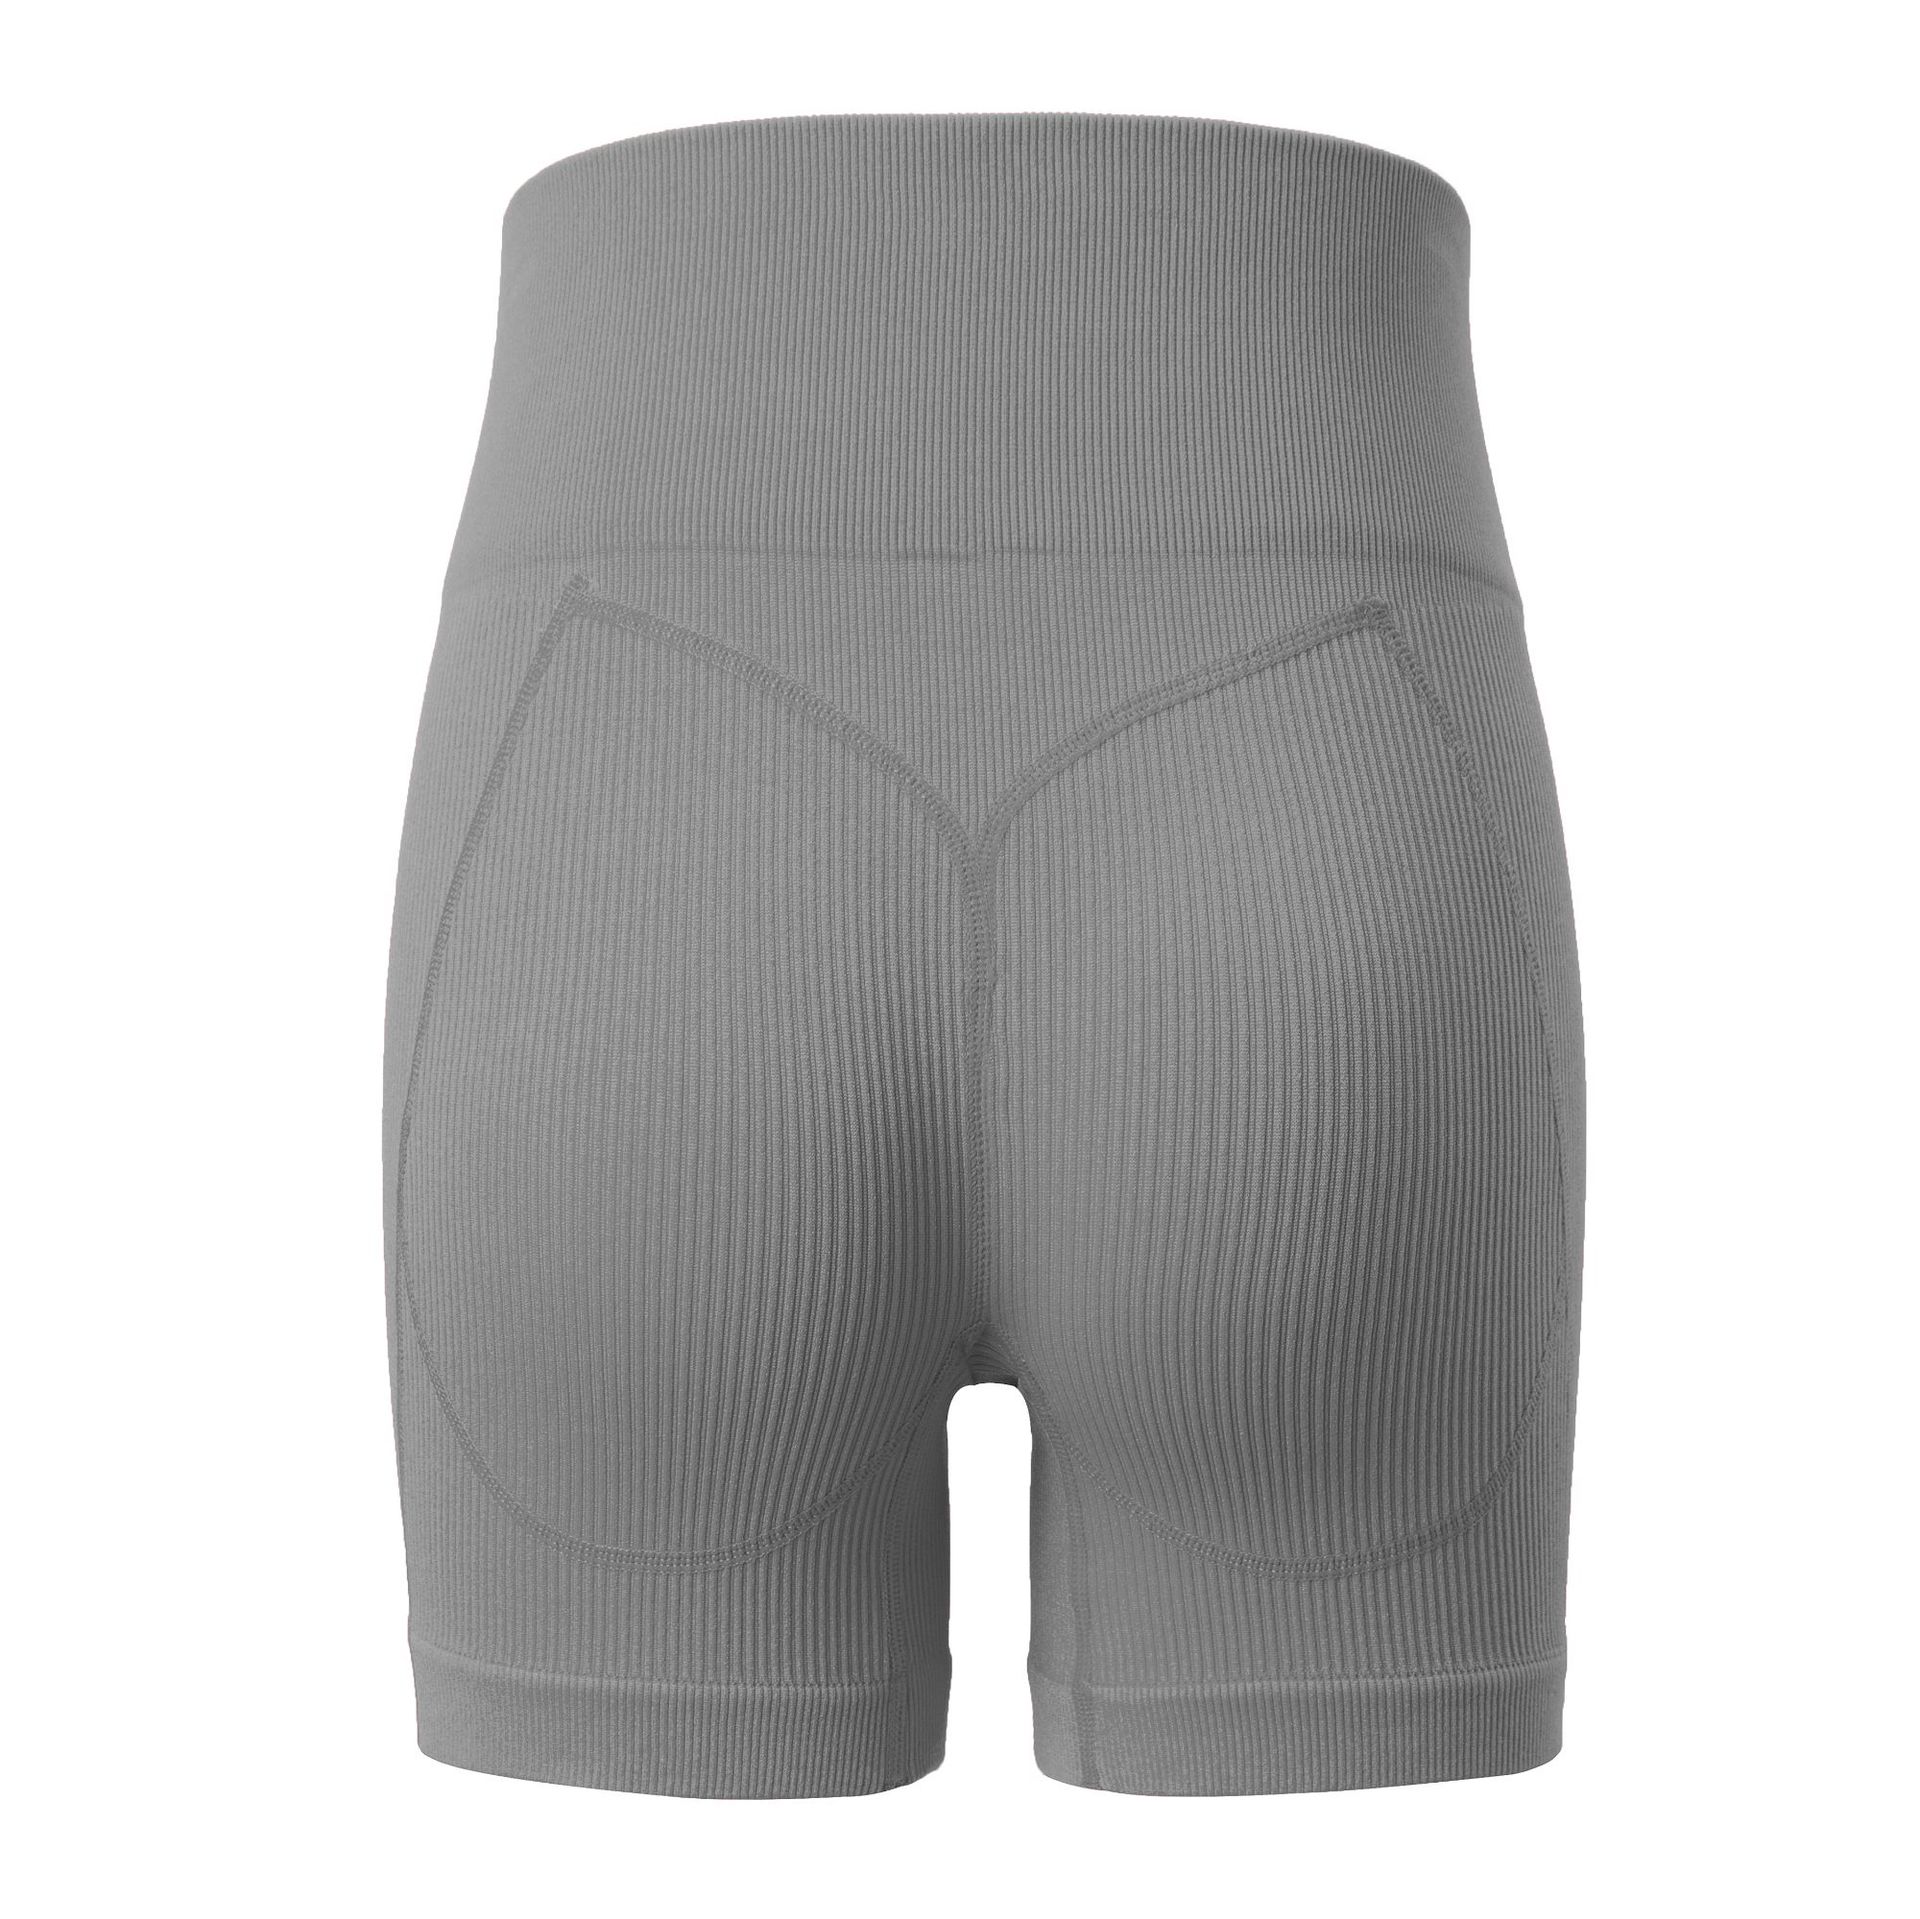 Female Ribbed Shorts Solid Color Short Pants Biker Shorts High Elastic Short Leggings Quick Dry Short Pants Athletic Yoga Shorts